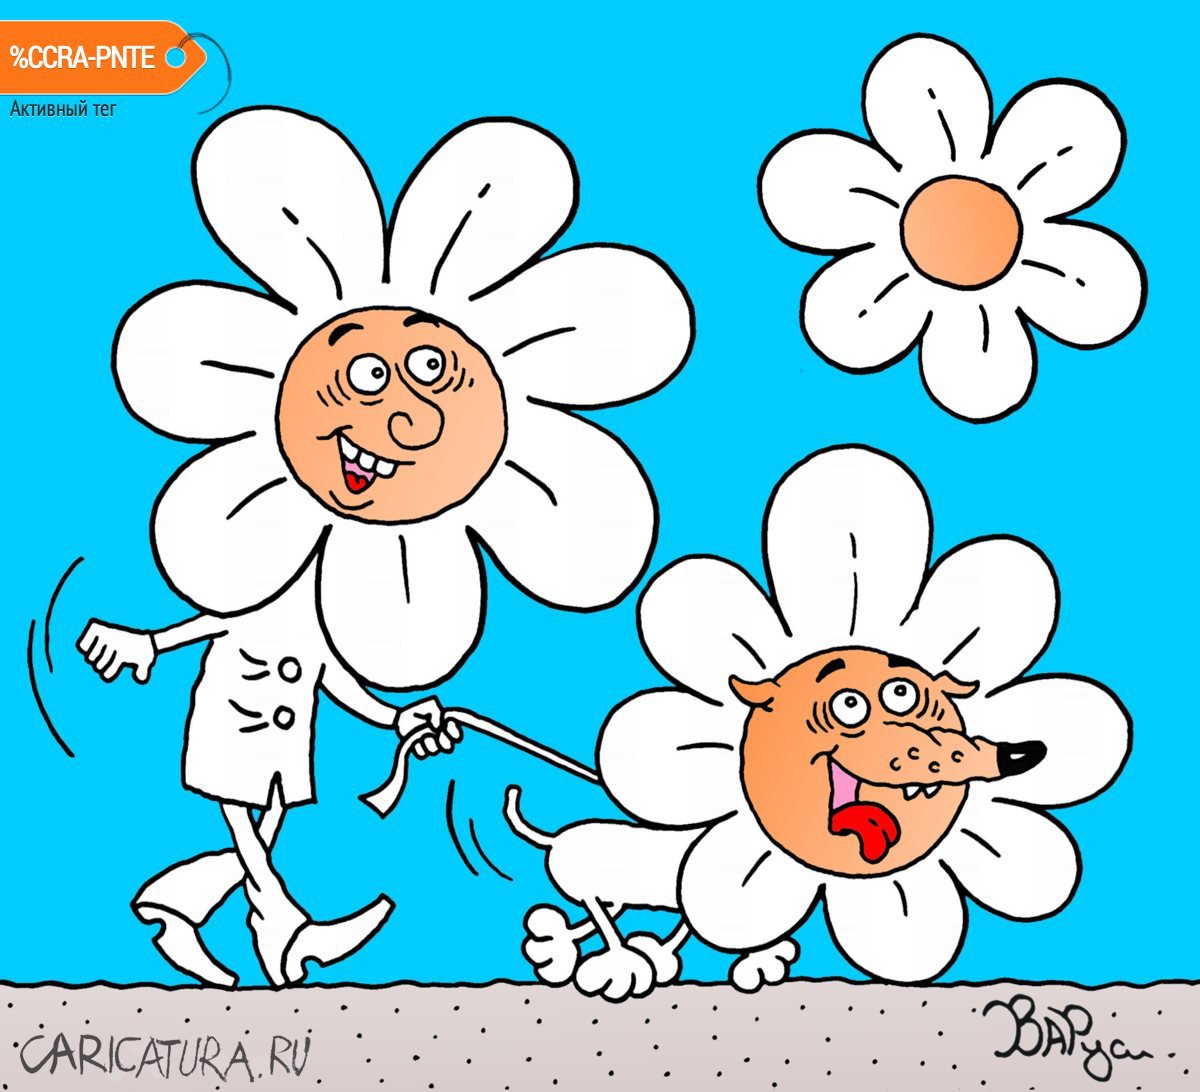 Карикатура "Весна", Руслан Валитов